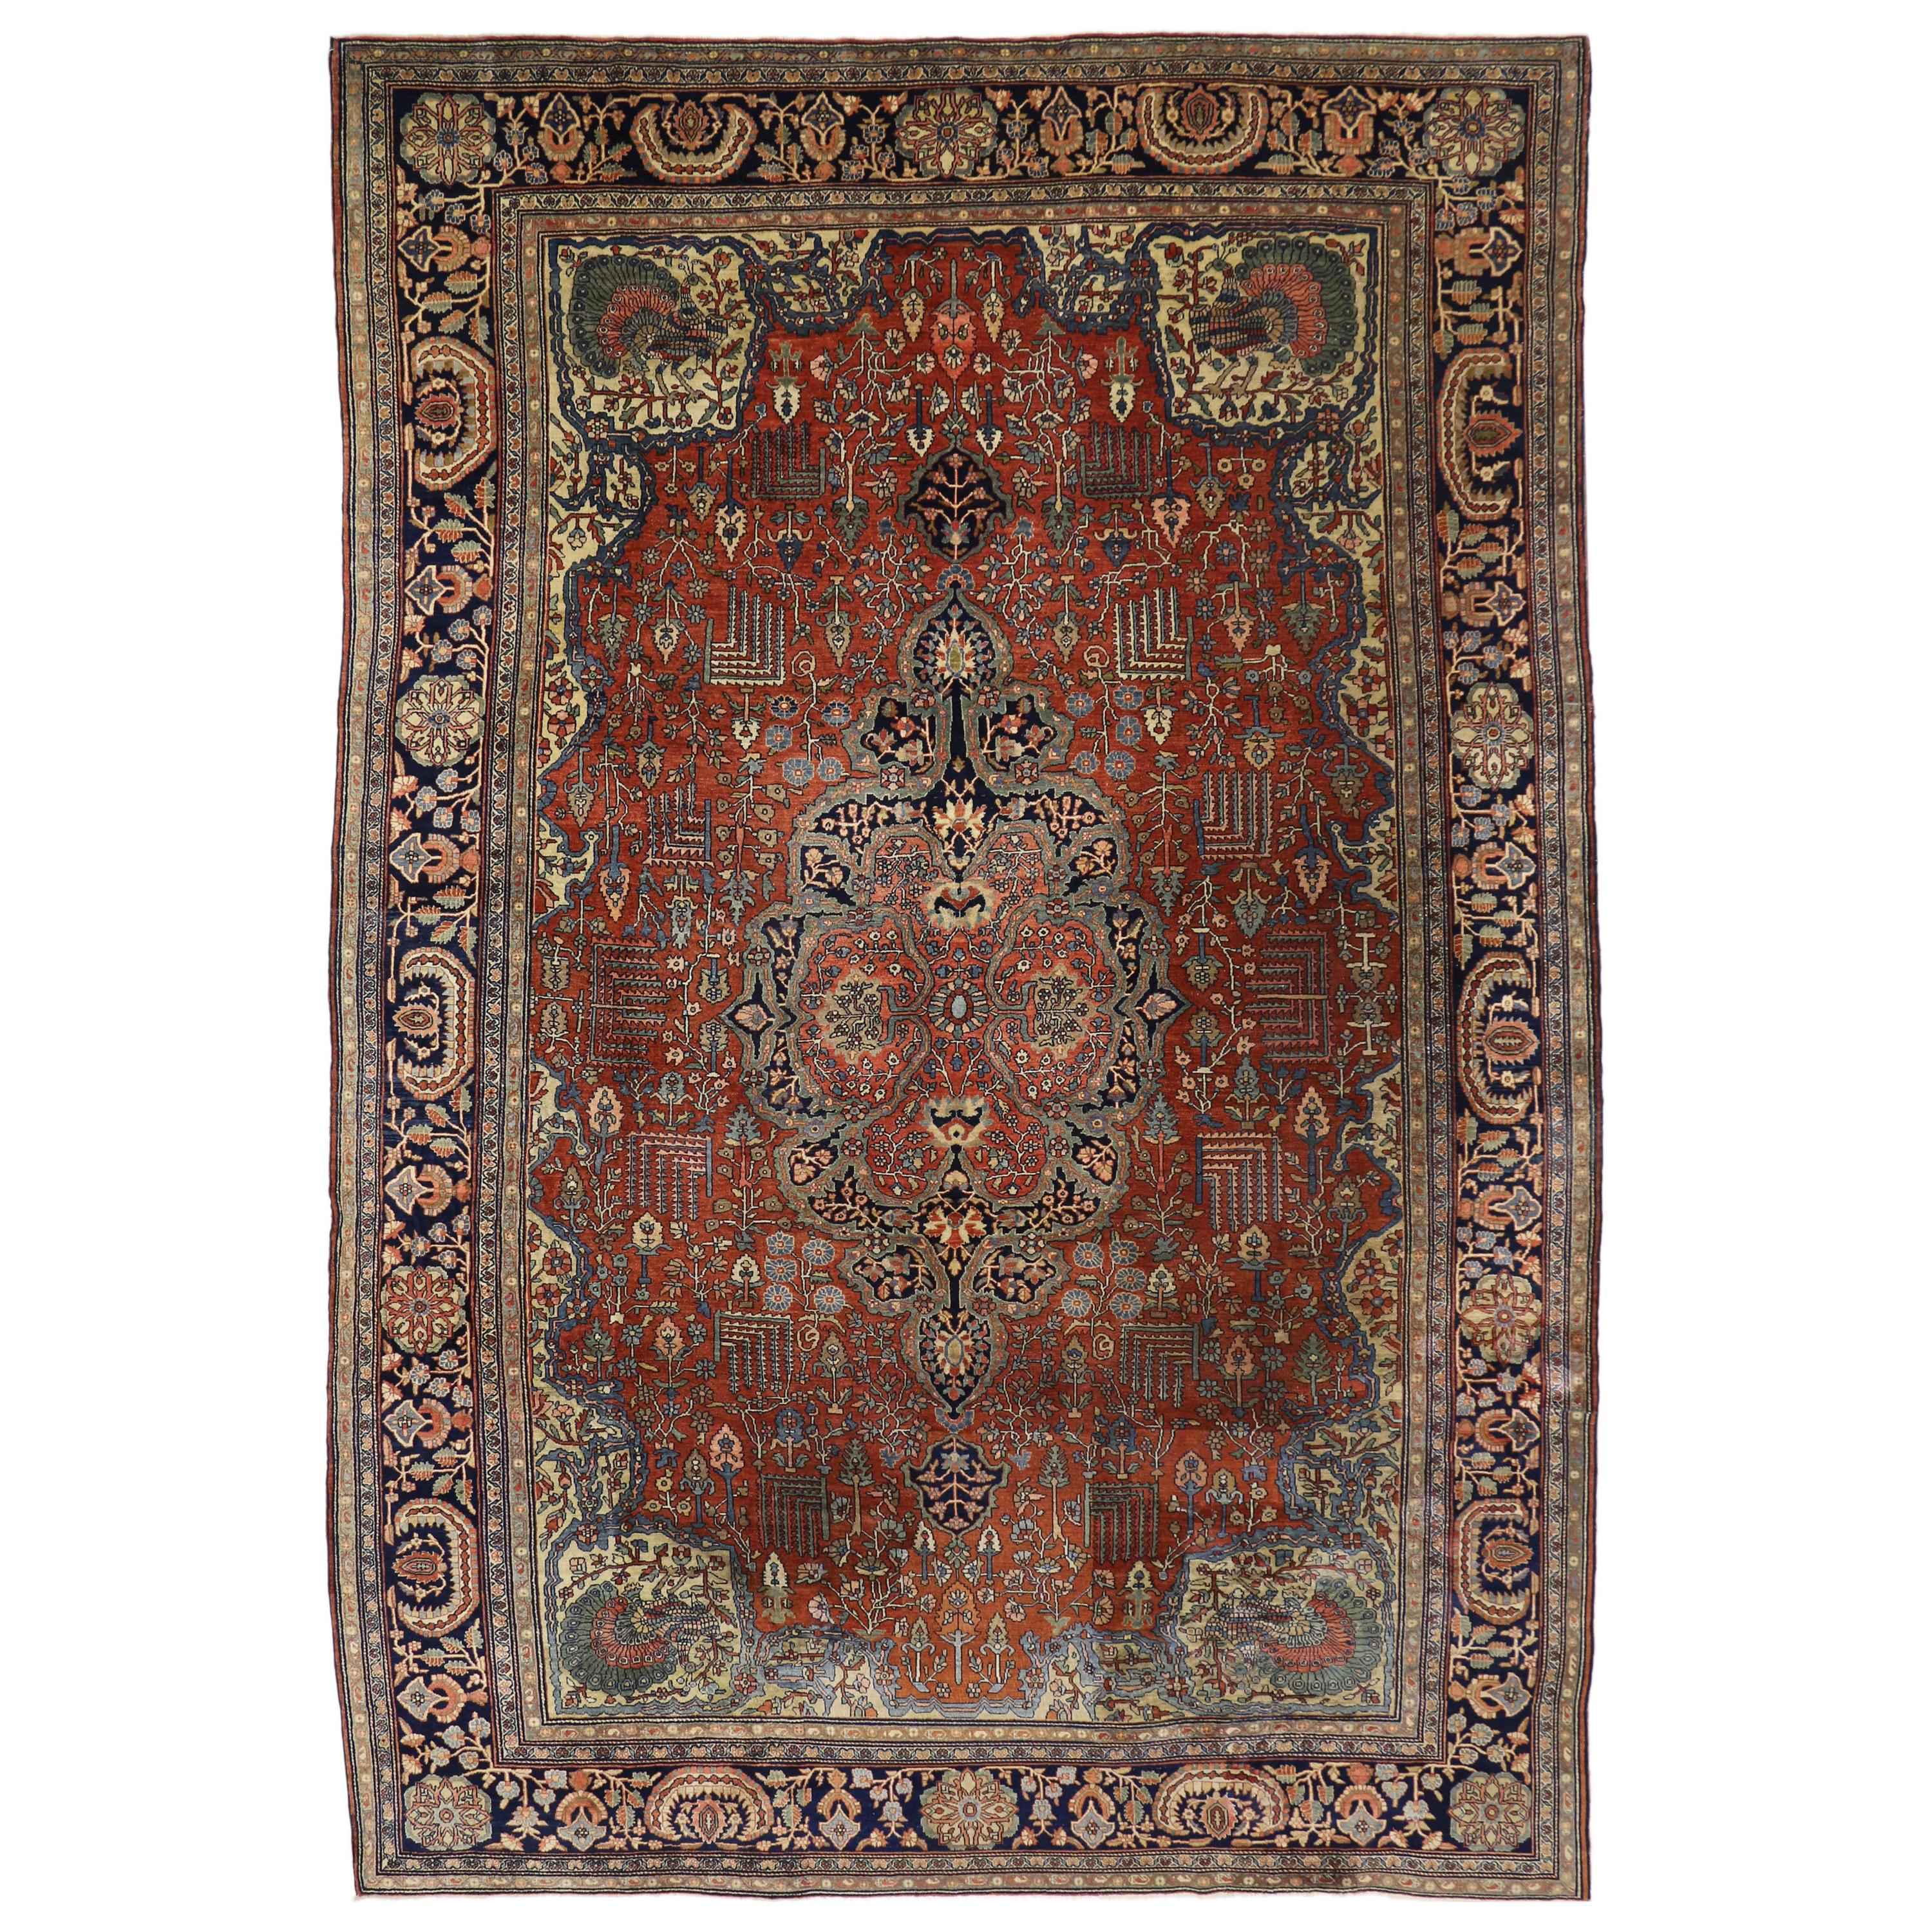 1880s Oversized Antique Persian Sarouk Farahan Rug, Hotel Lobby Size Carpet For Sale